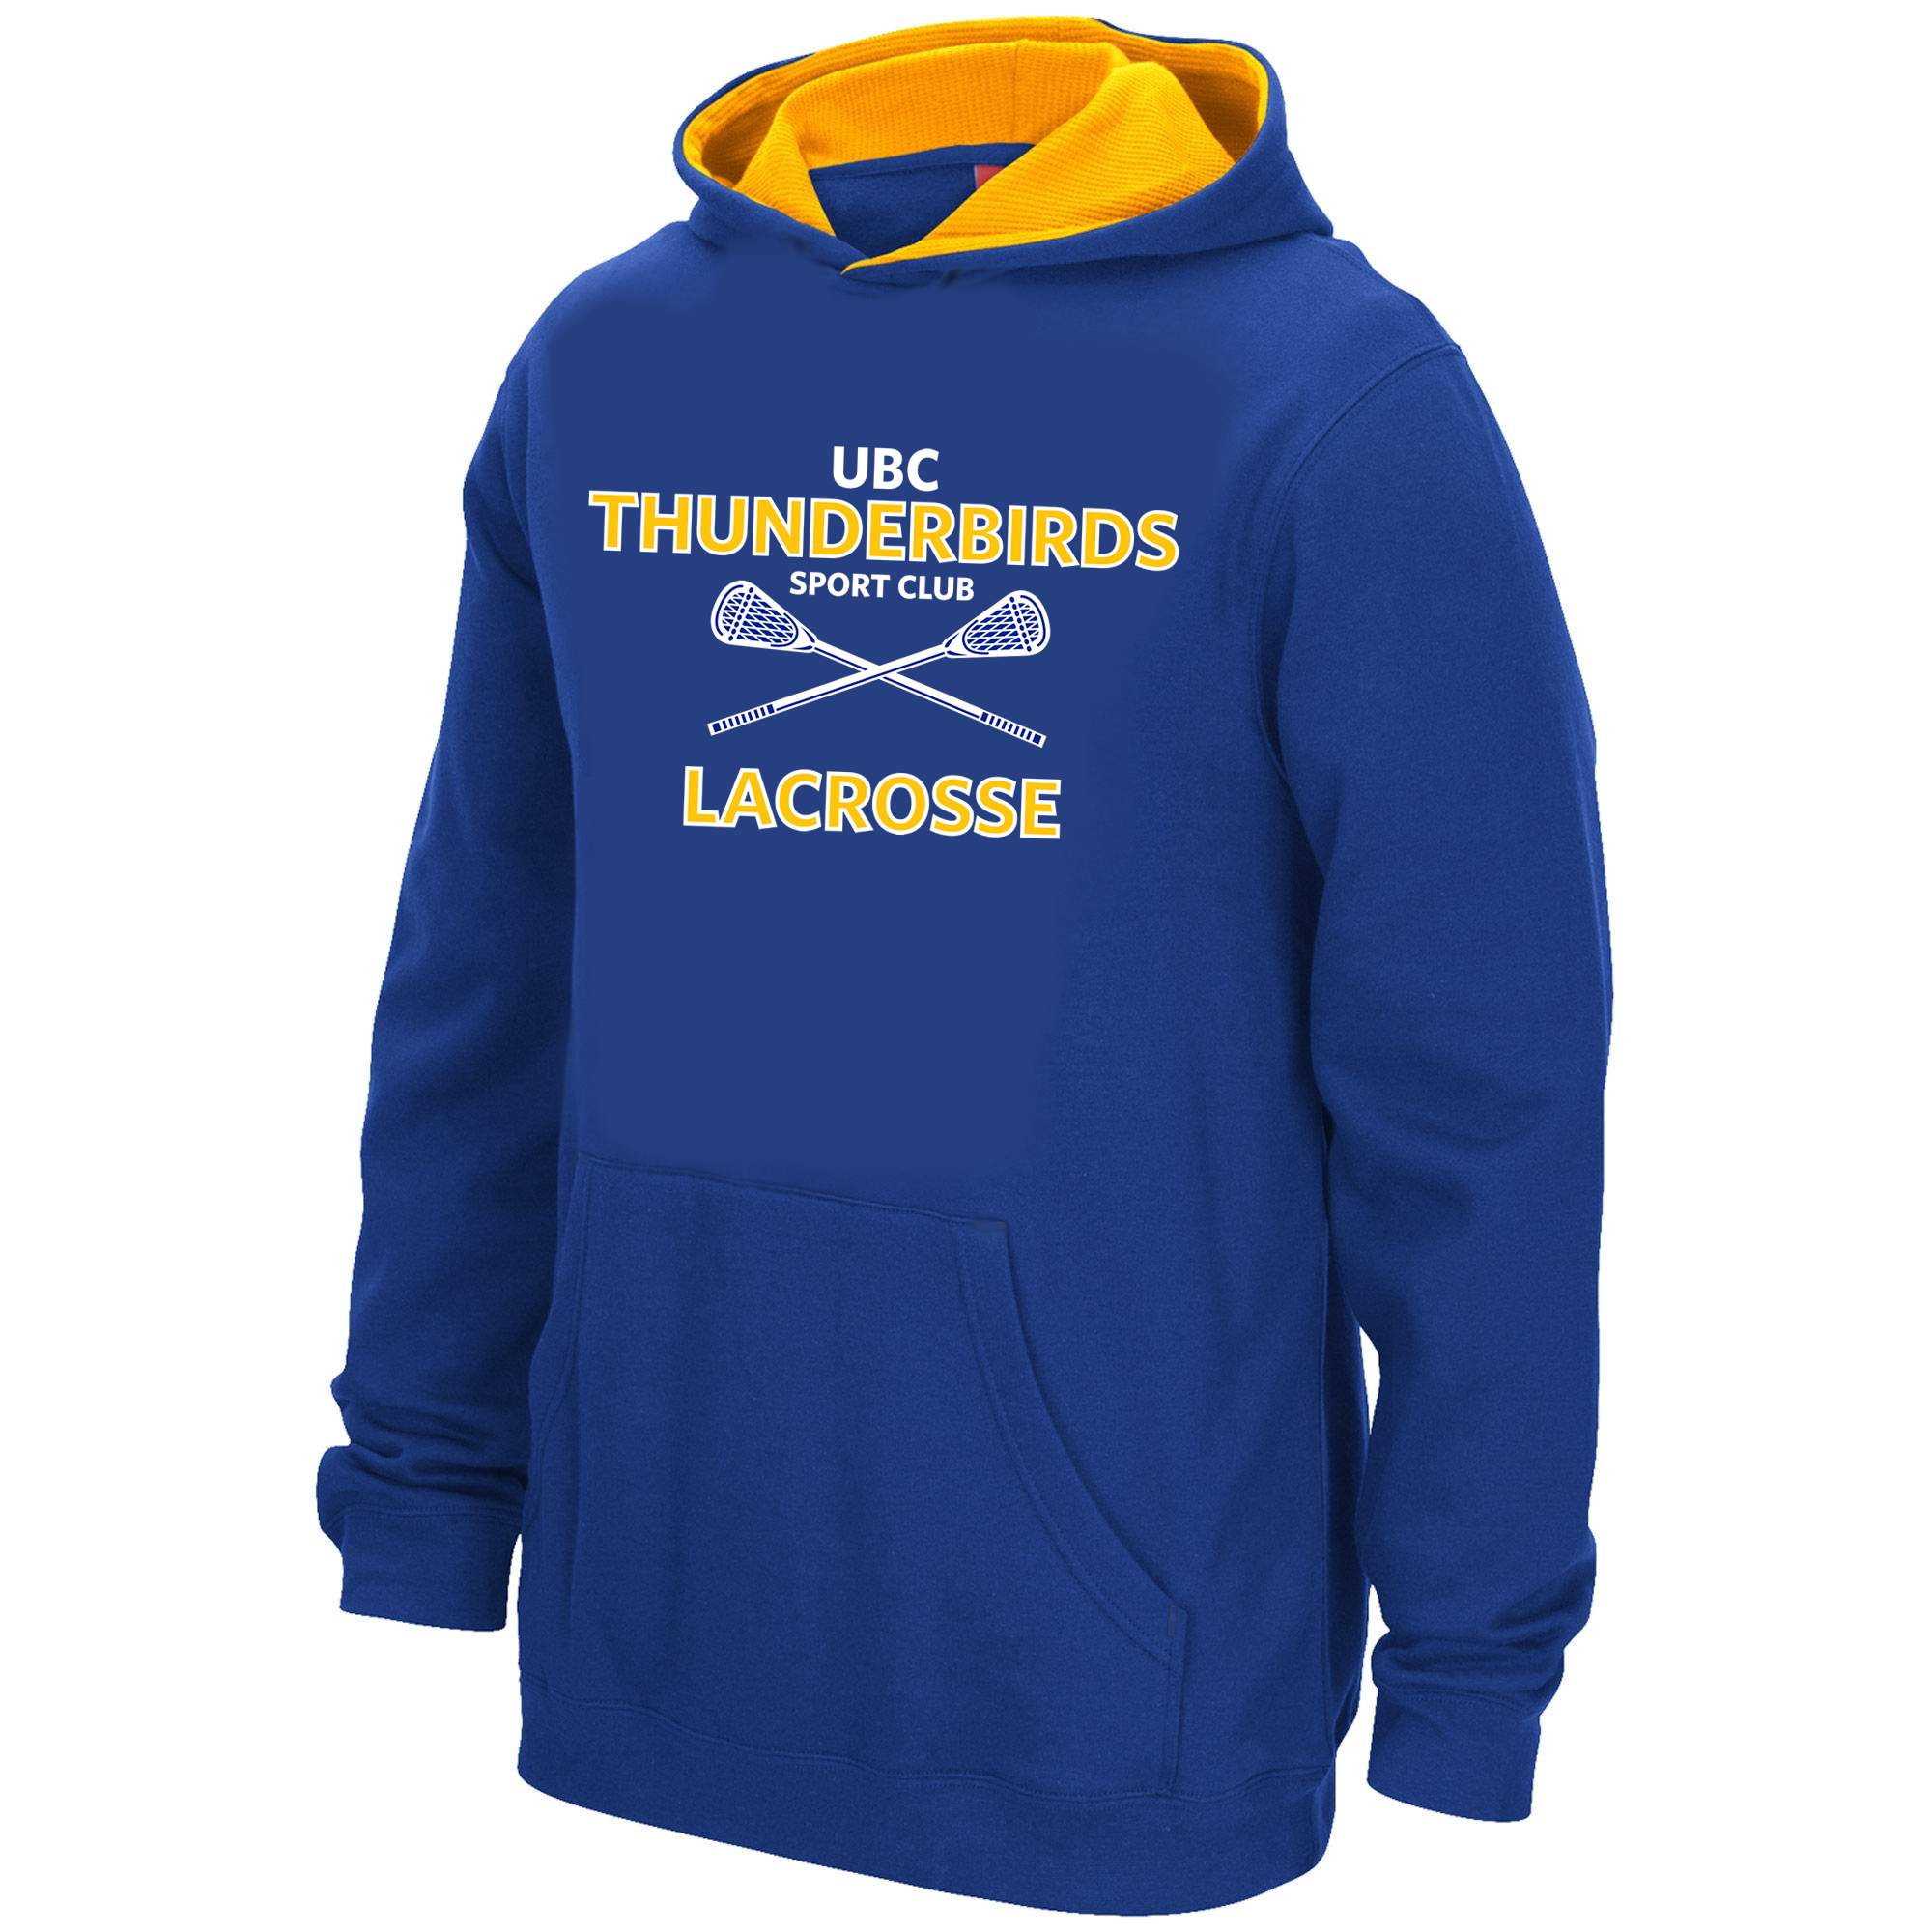 ubc thunderbirds hoodie